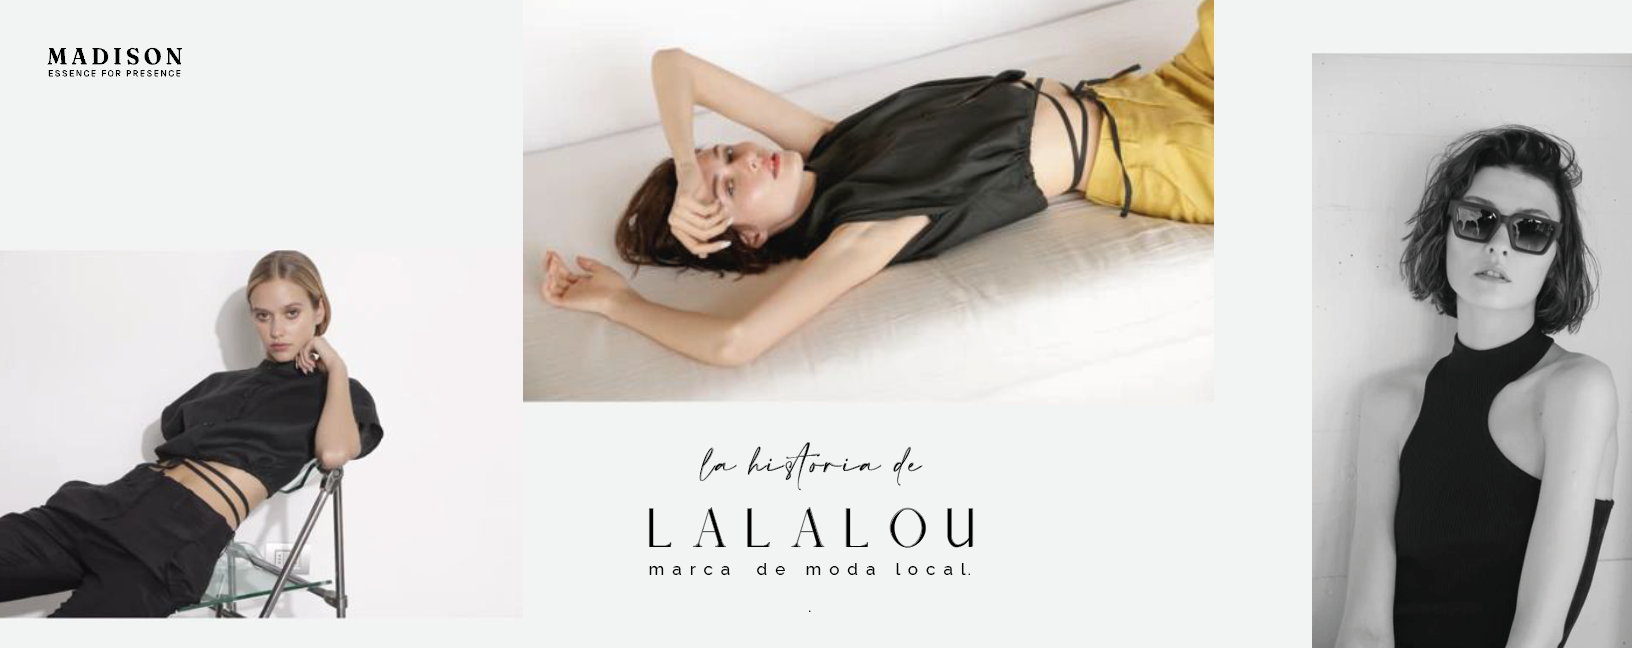 Marcas que inspiran: La historia de Lalalou